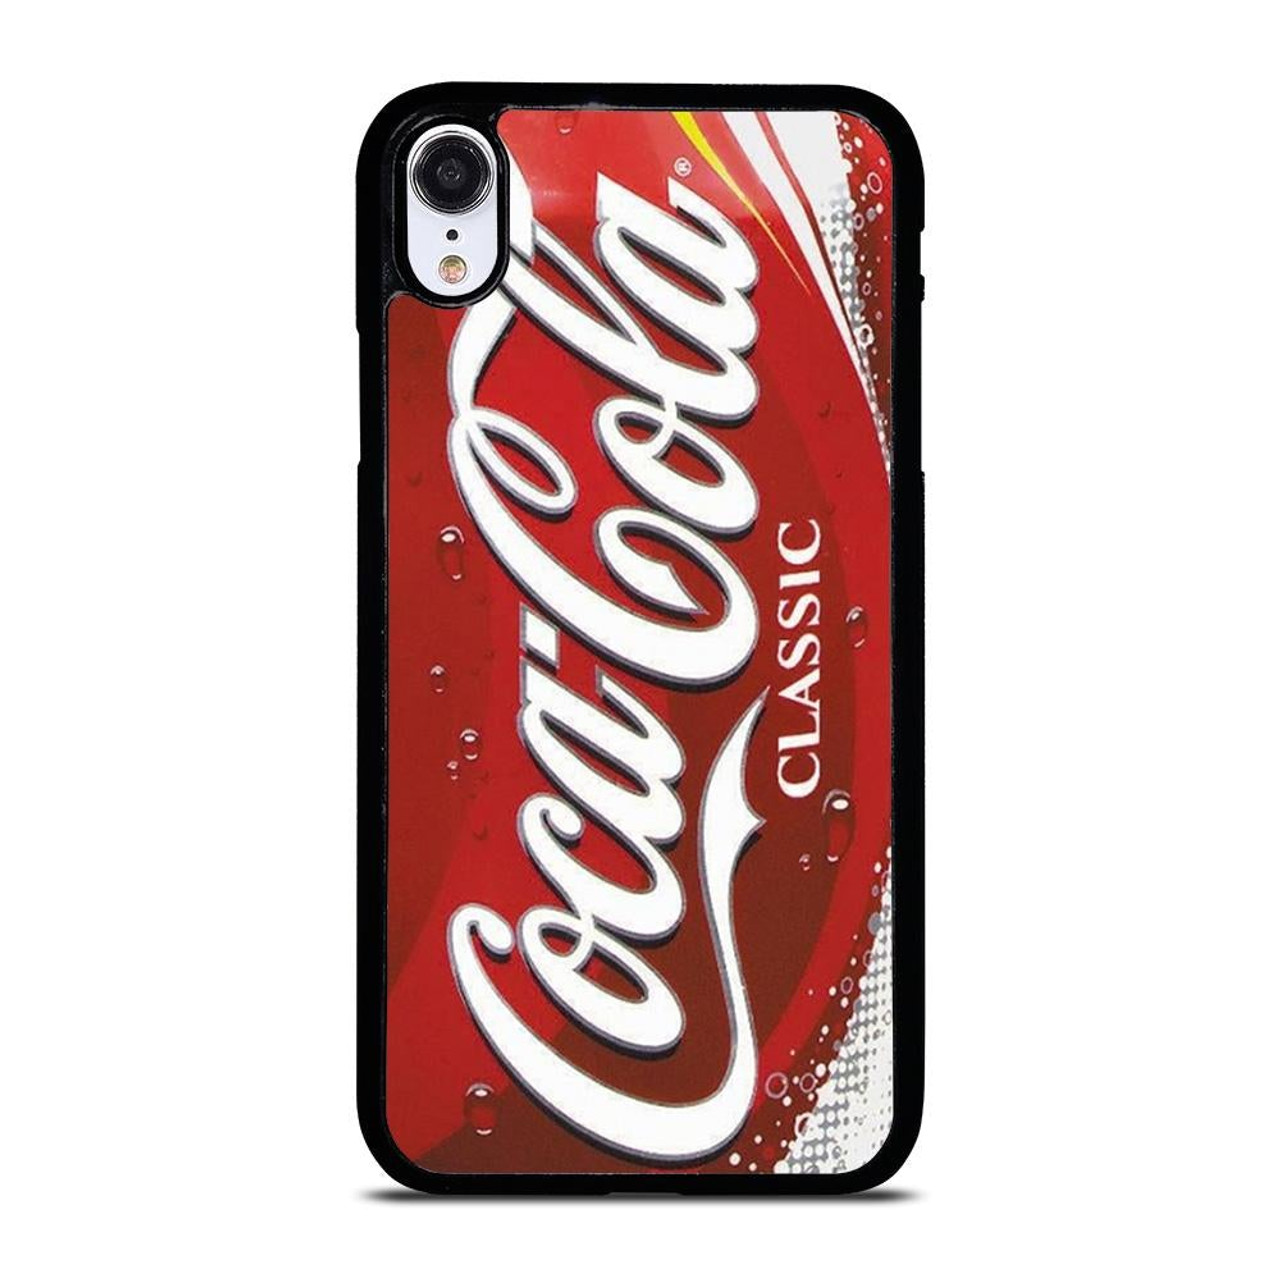 COCA COLA LOGO iPhone XR Case Cover